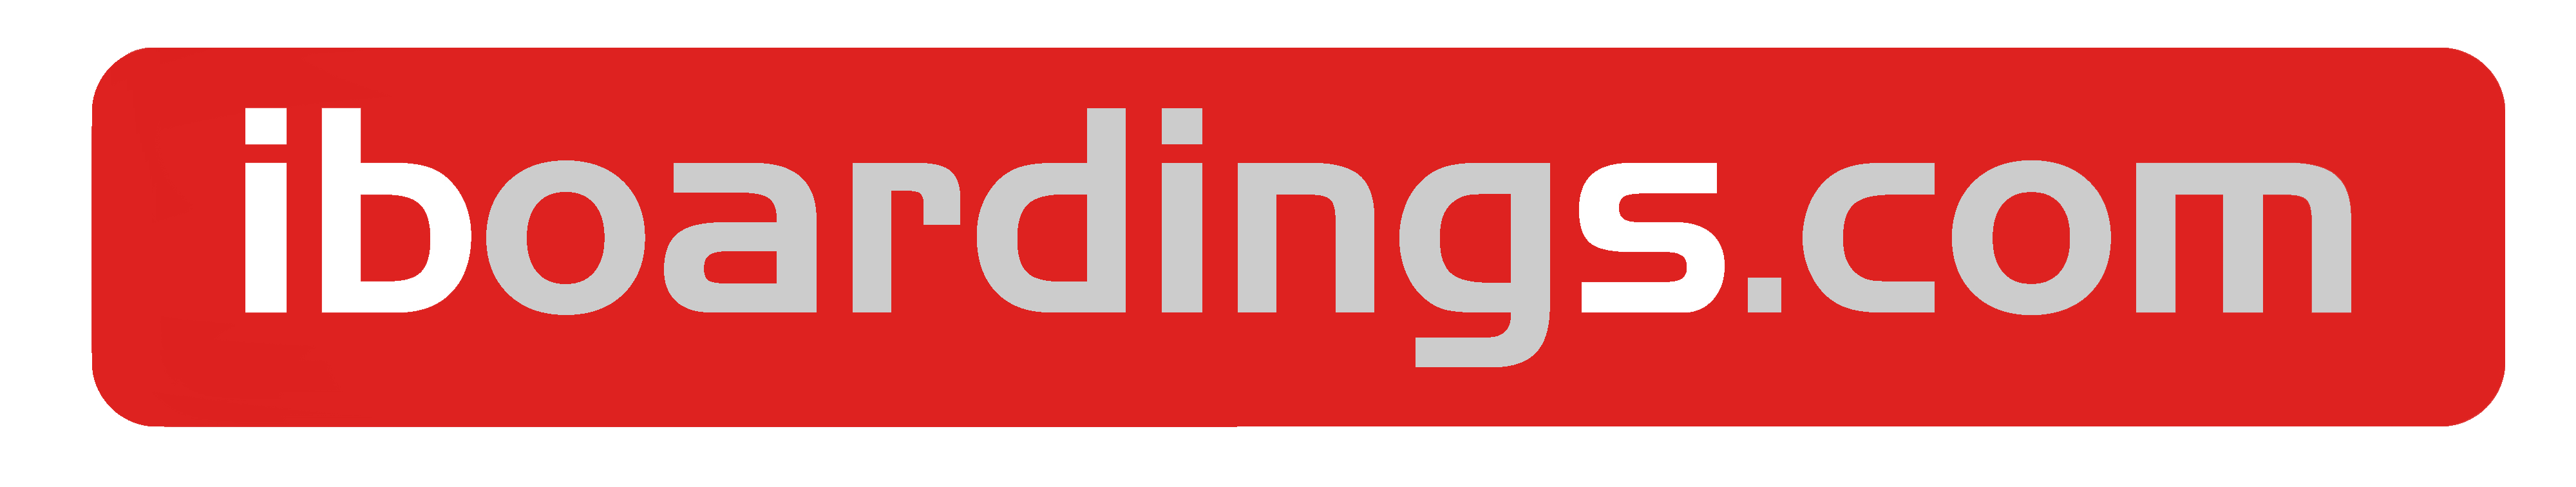 logo_iboardings (2) (4).png